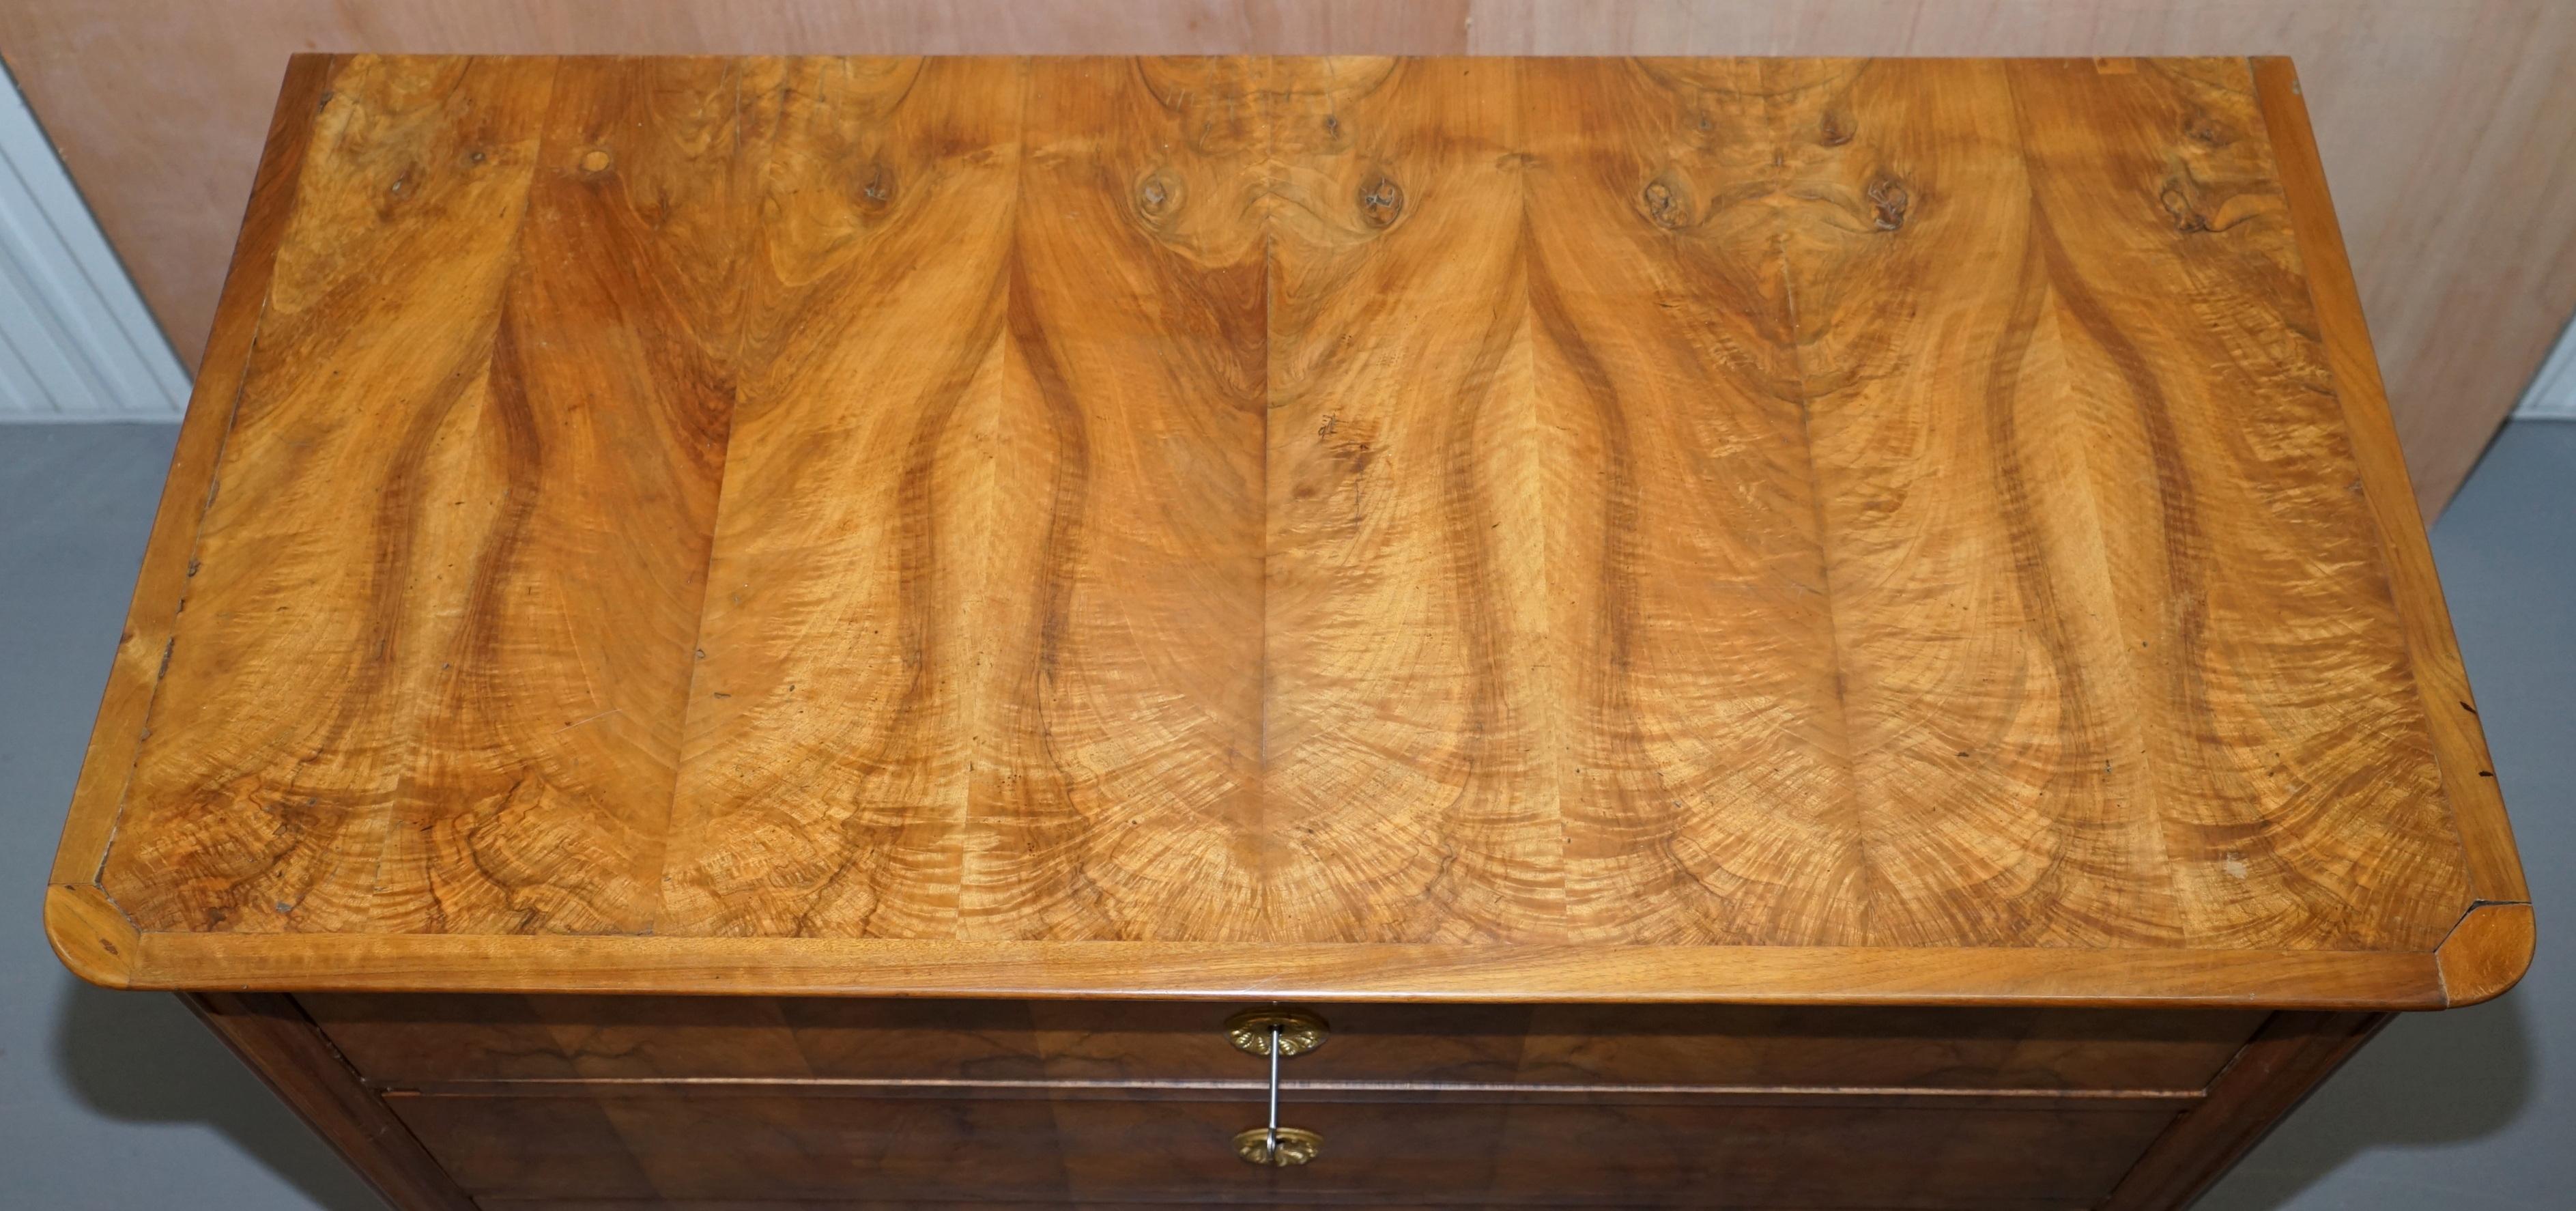 Hand-Crafted Huge 19th Century Walnut Biedermeier Chest of Drawers Drop Front Desk Secretaire